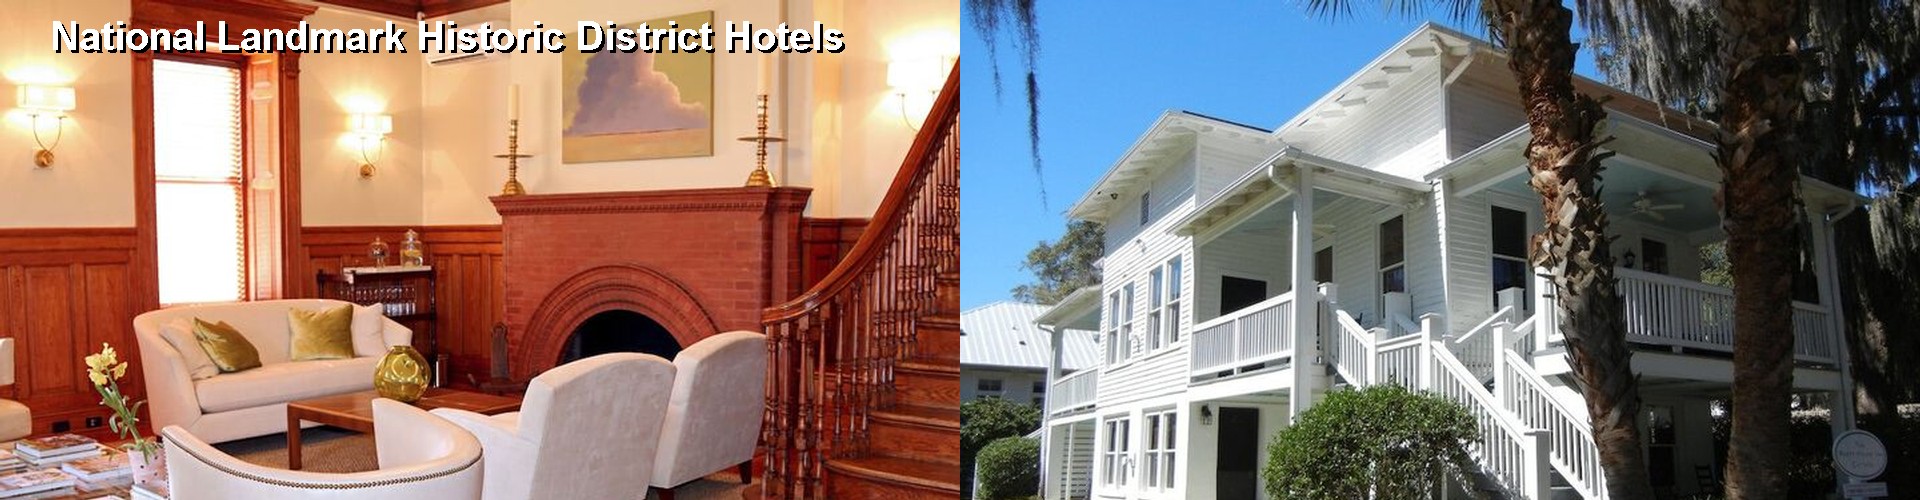 5 Best Hotels near National Landmark Historic District